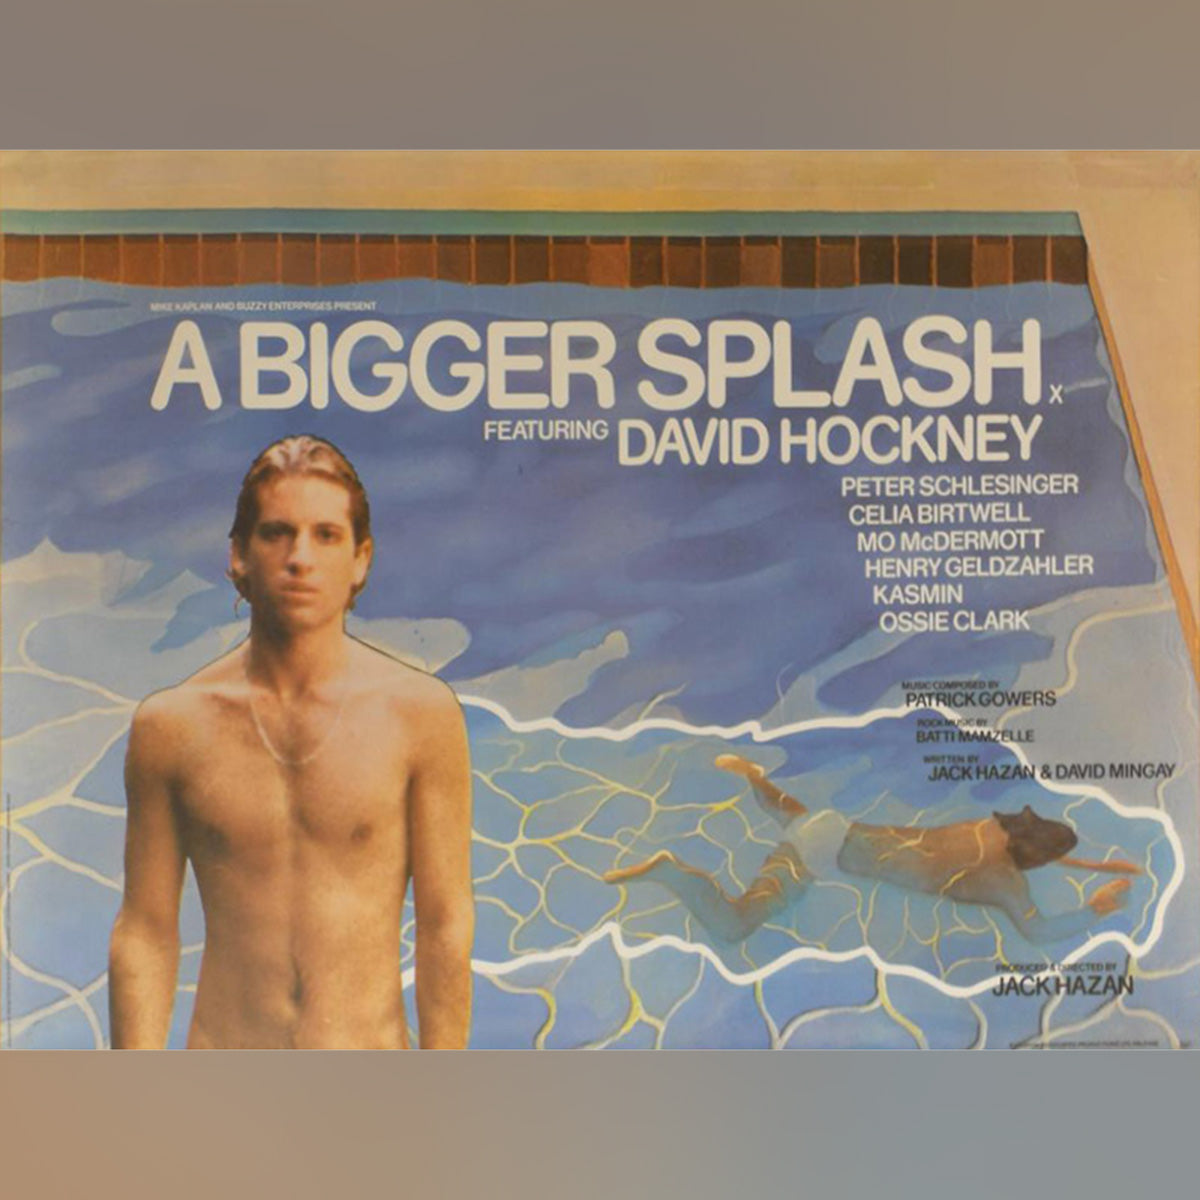 Original Movie Poster of A Bigger Splash (1973)